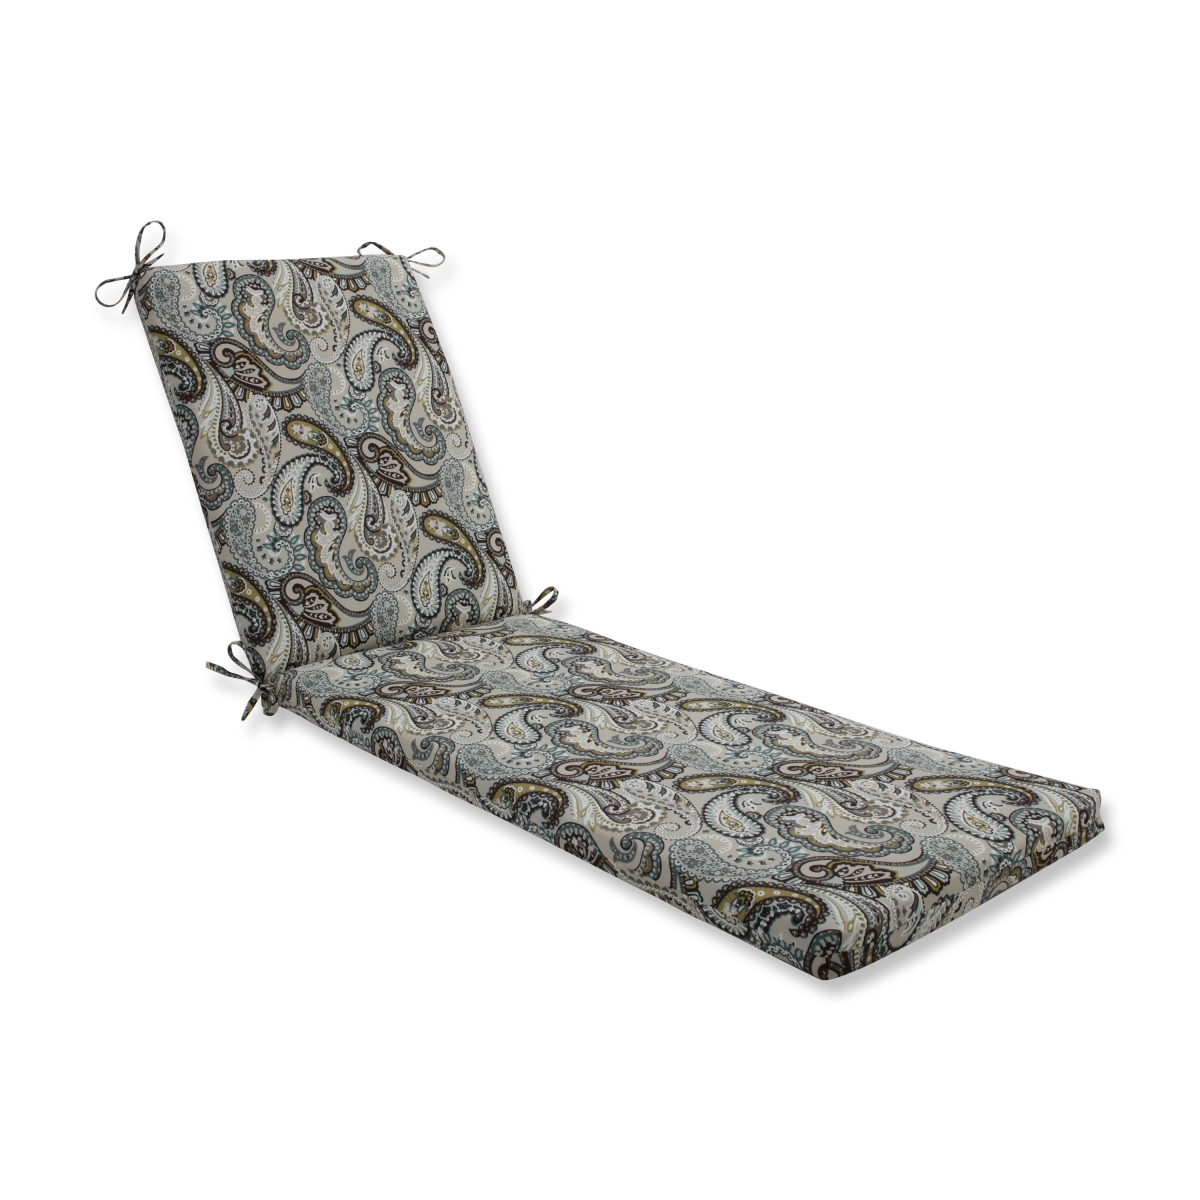 80 X 23 X 3 In. Outdoor & Indoor Tamara Paisley Quartz Chaise Lounge Cushion, Blue